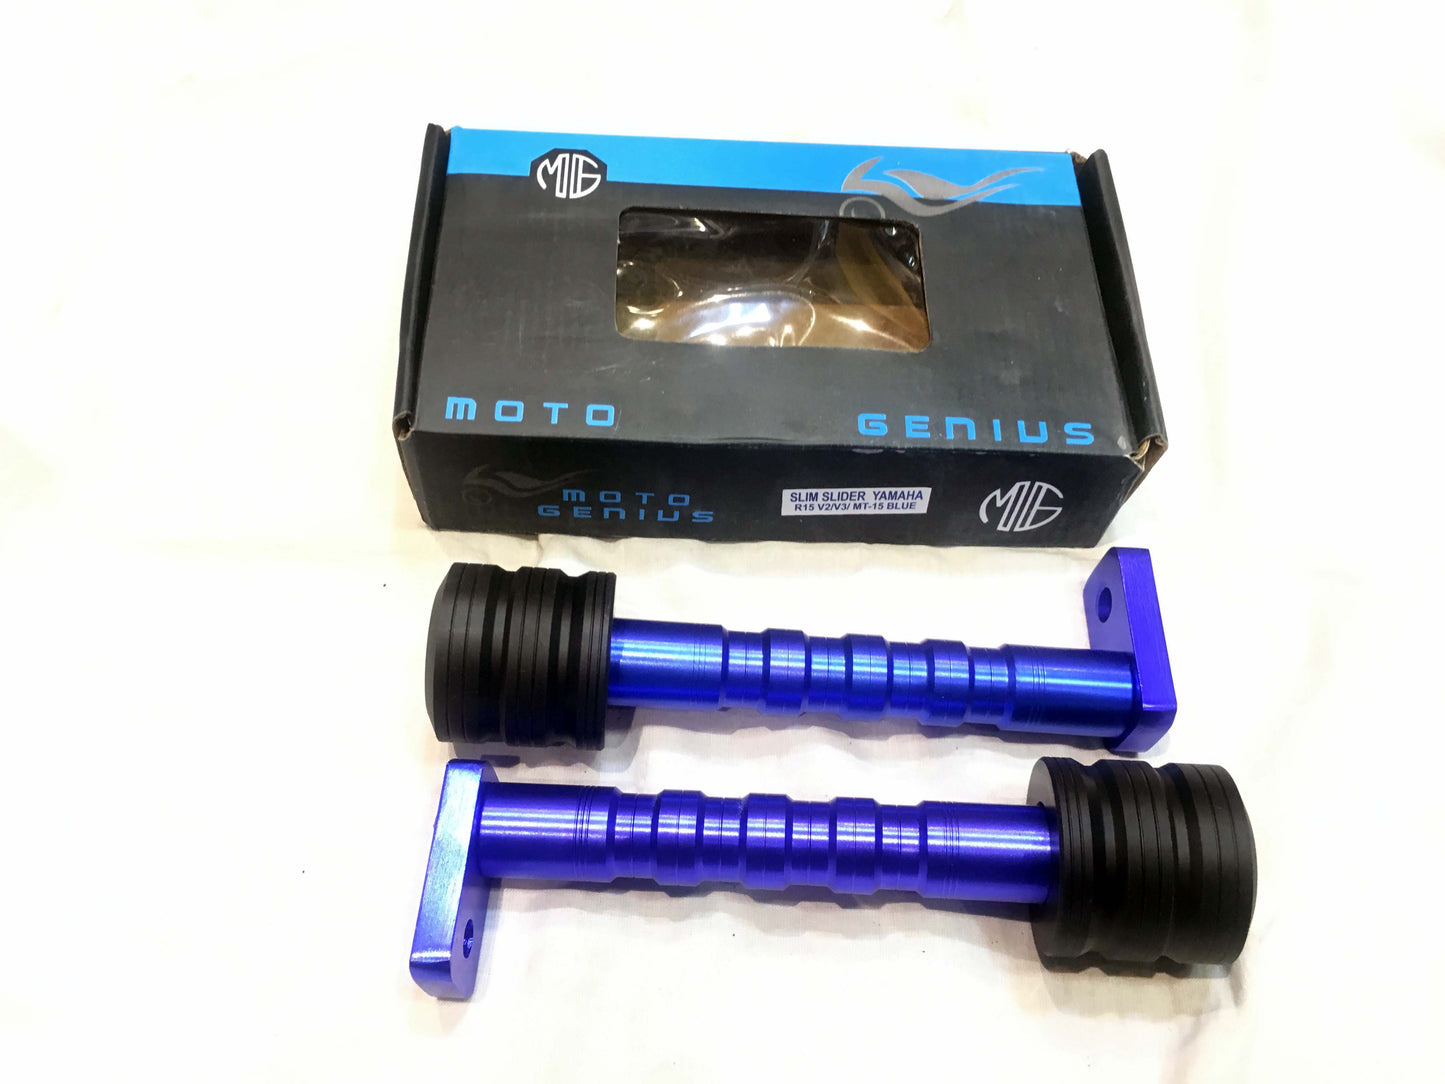 Yamaha Logo Heavy R15 V3 Frame Slider (Blue) - Premium Frame Sliders from Sparewick - Just Rs. 1499! Shop now at Sparewick